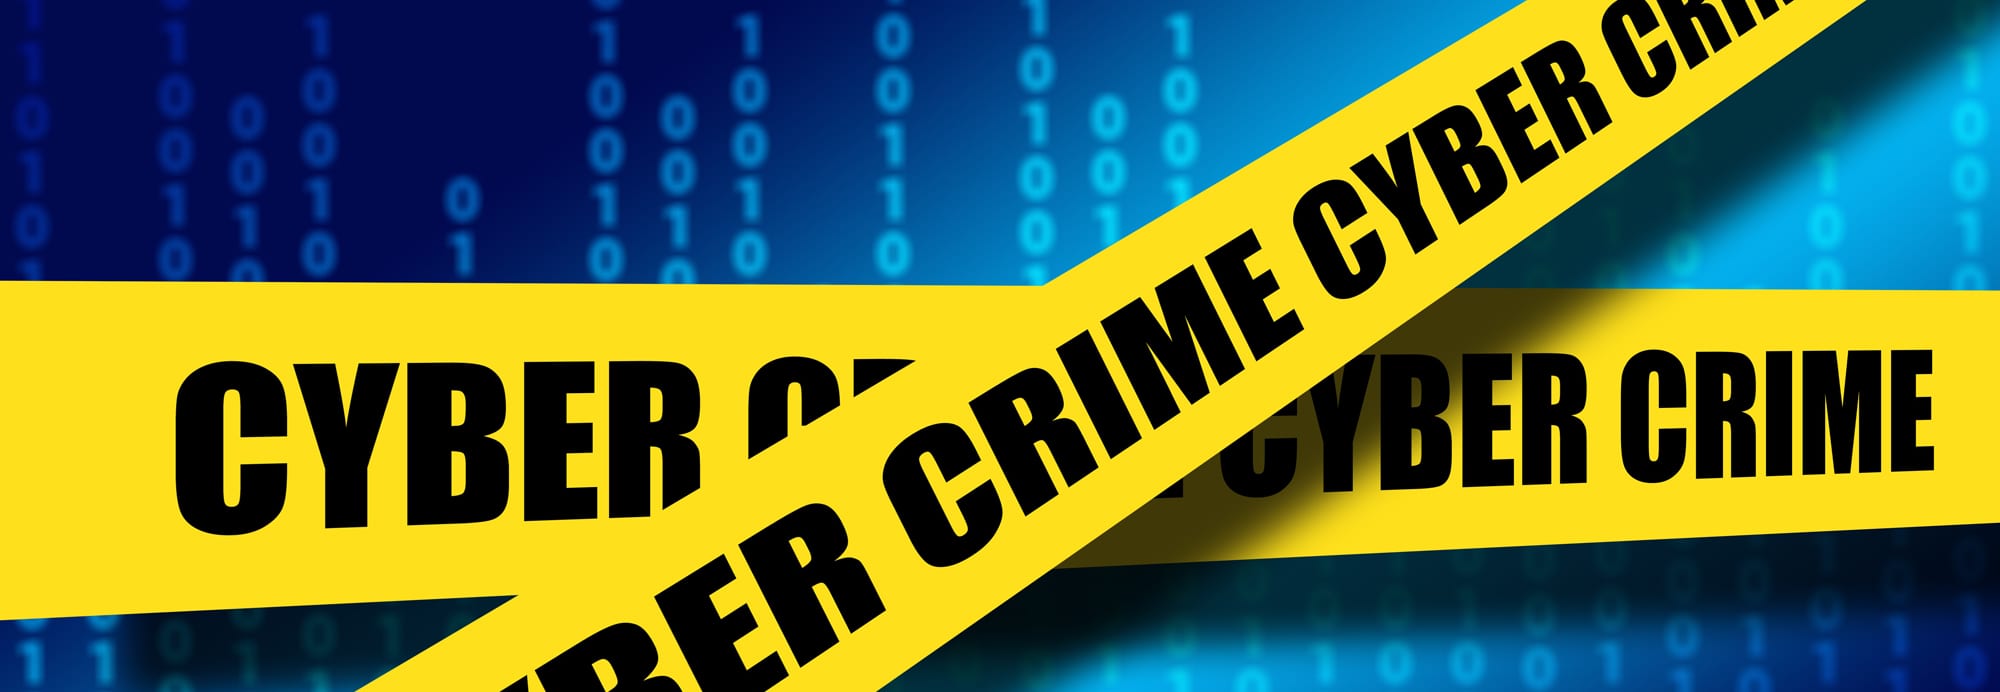 cybercrime header